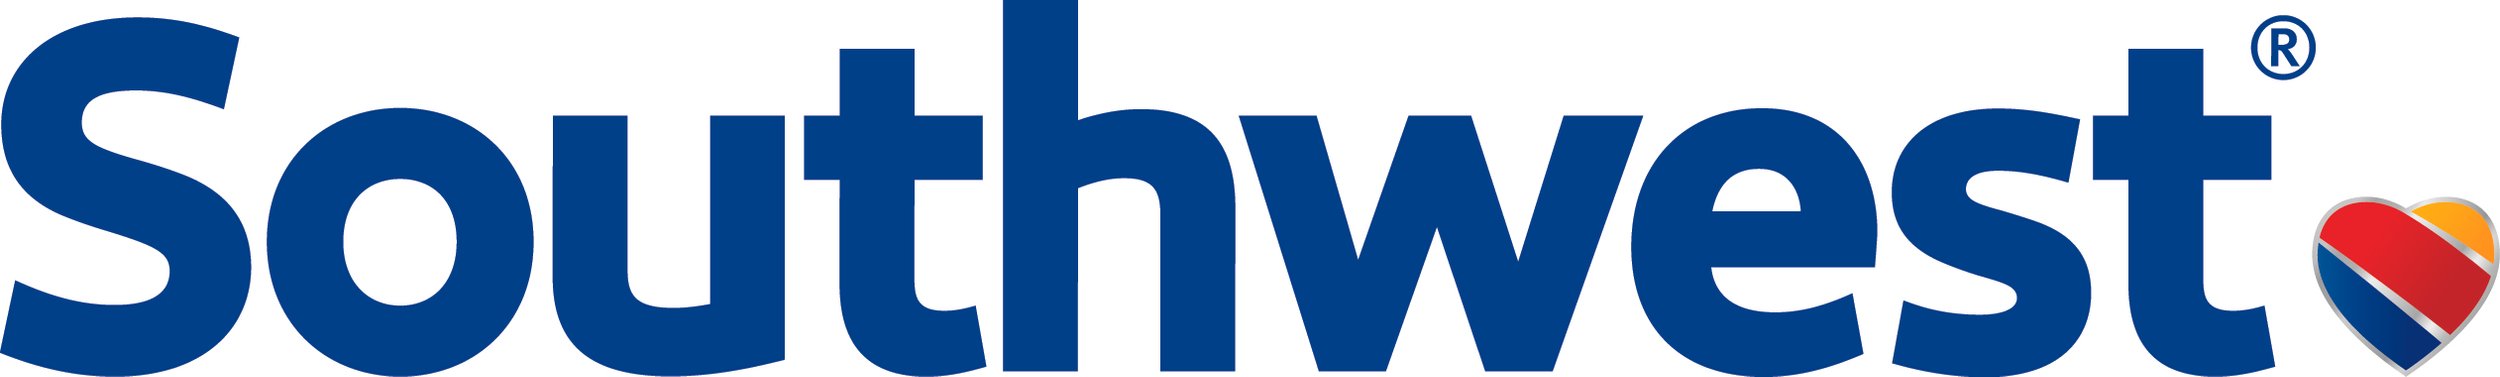 Southwest Logo.jpg